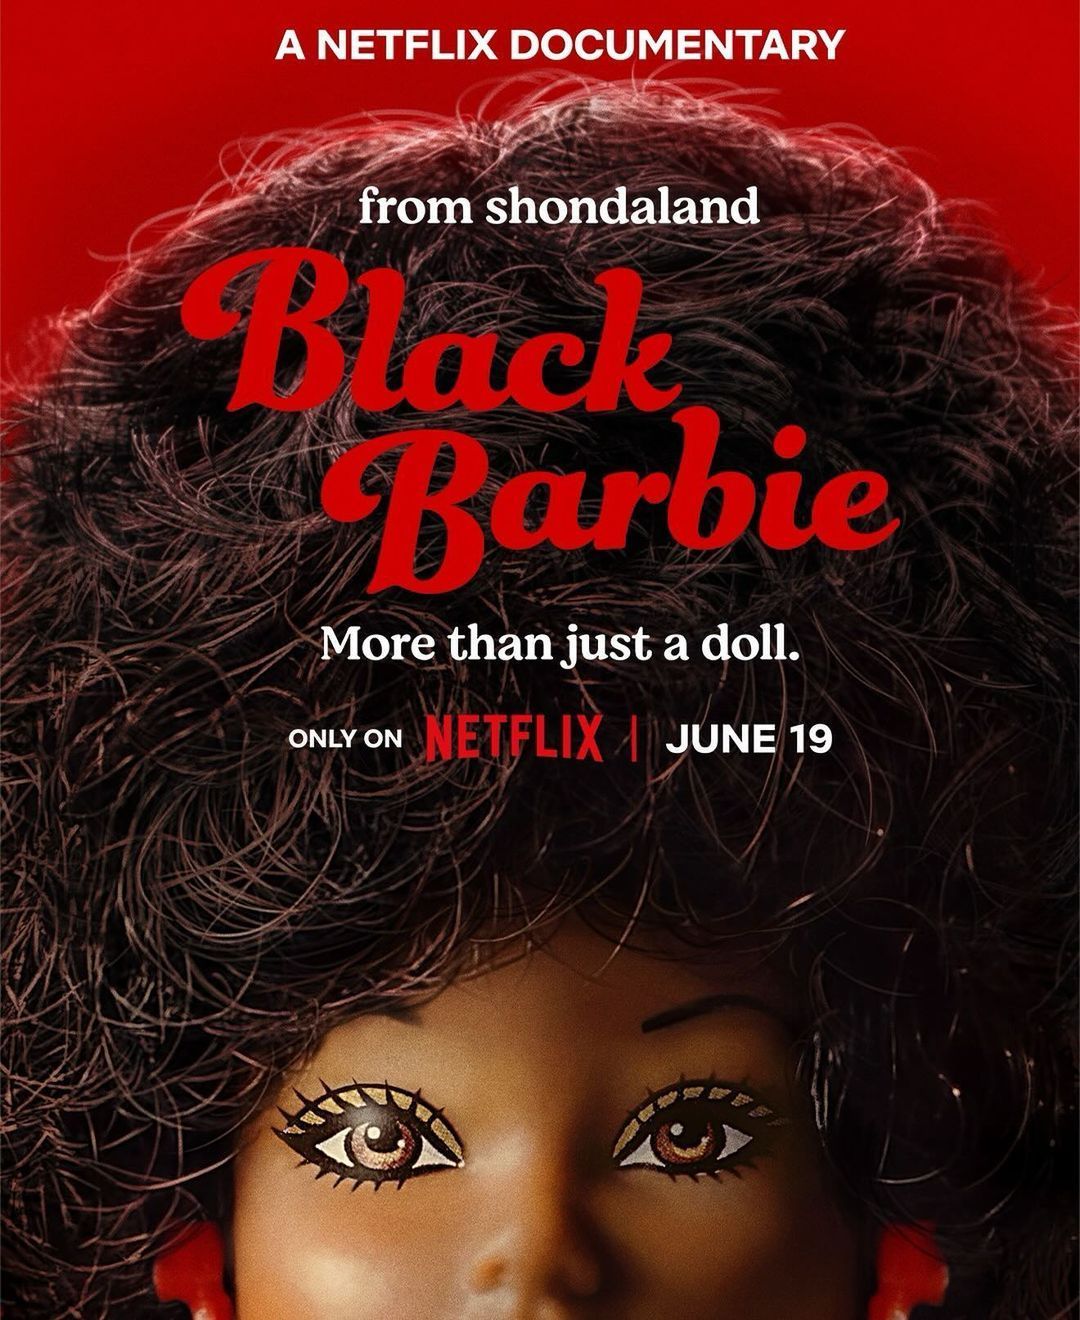 Black Barbie documentary on Netflix